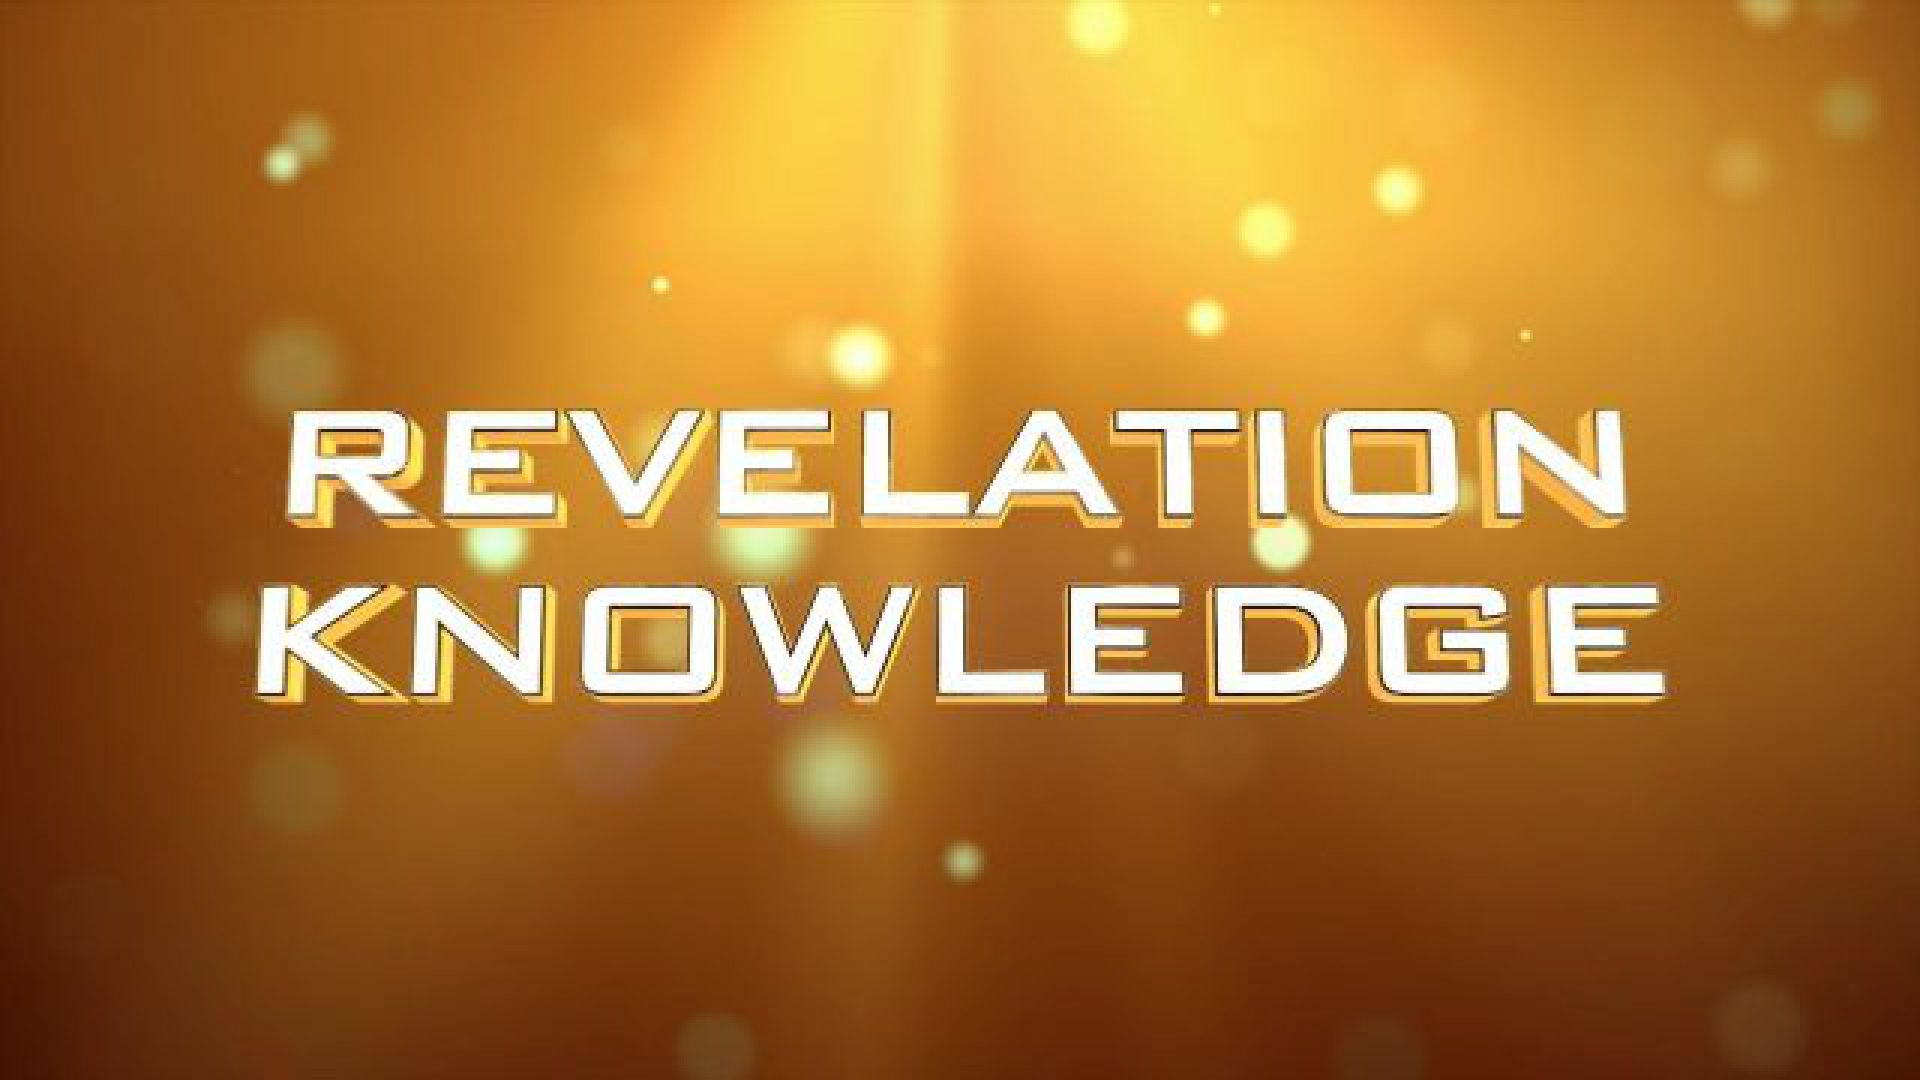 REVELATION KNOWLEDGE